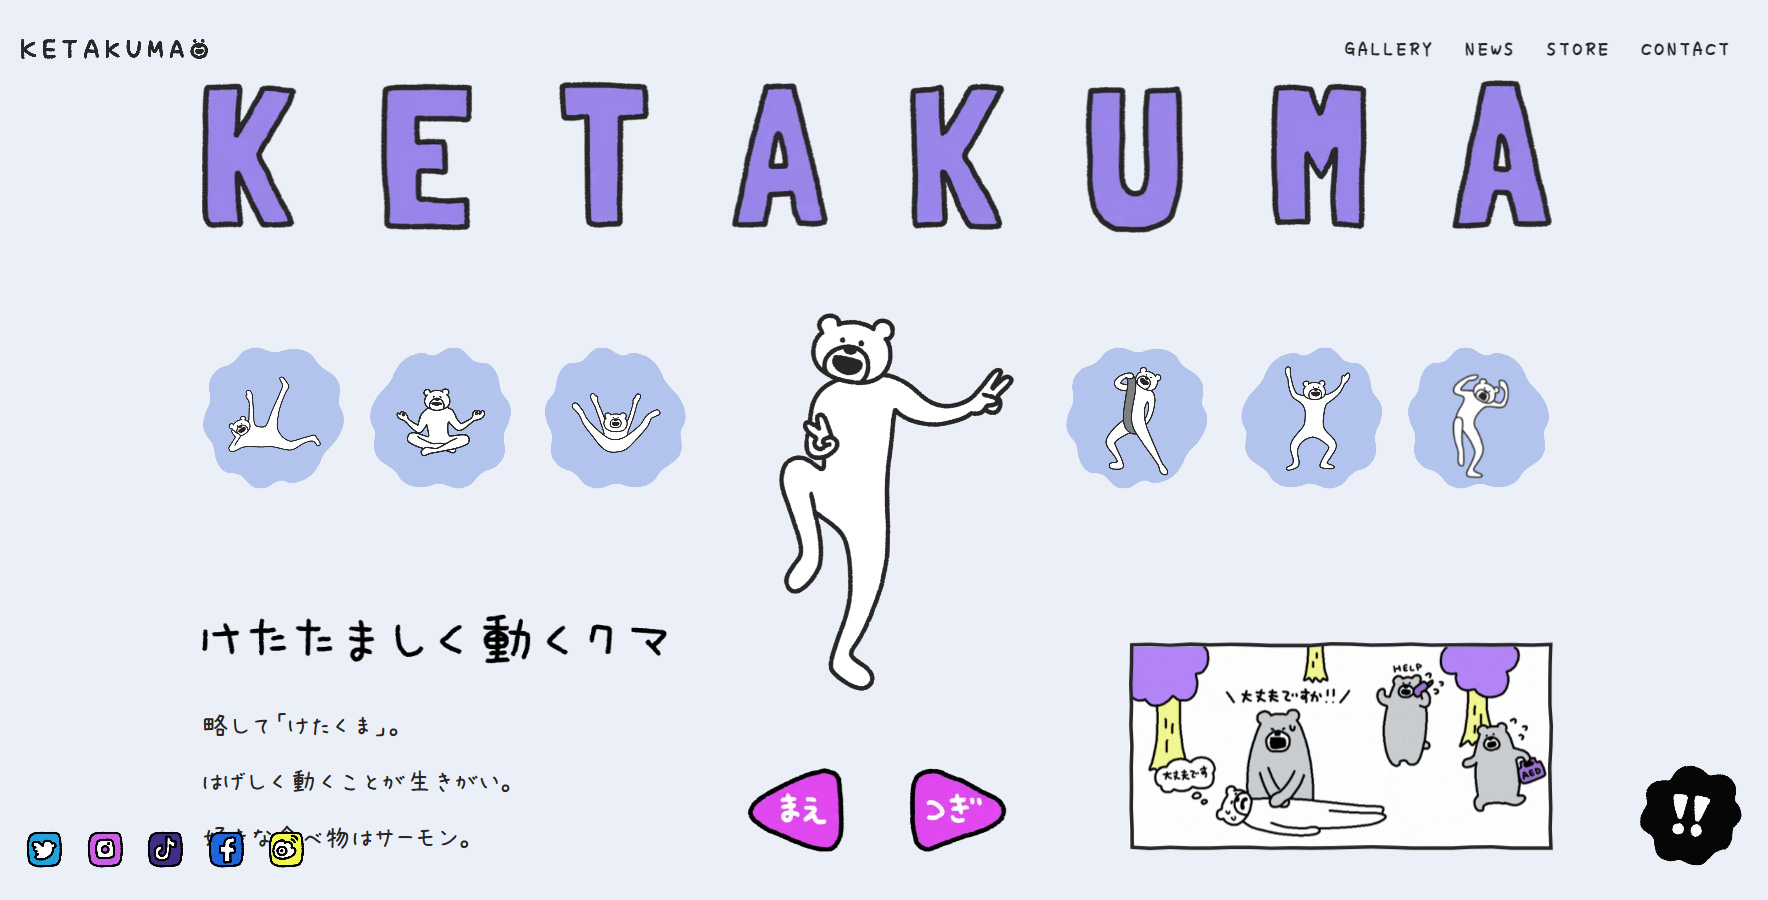 KETAKUMA Official - Website of the Day